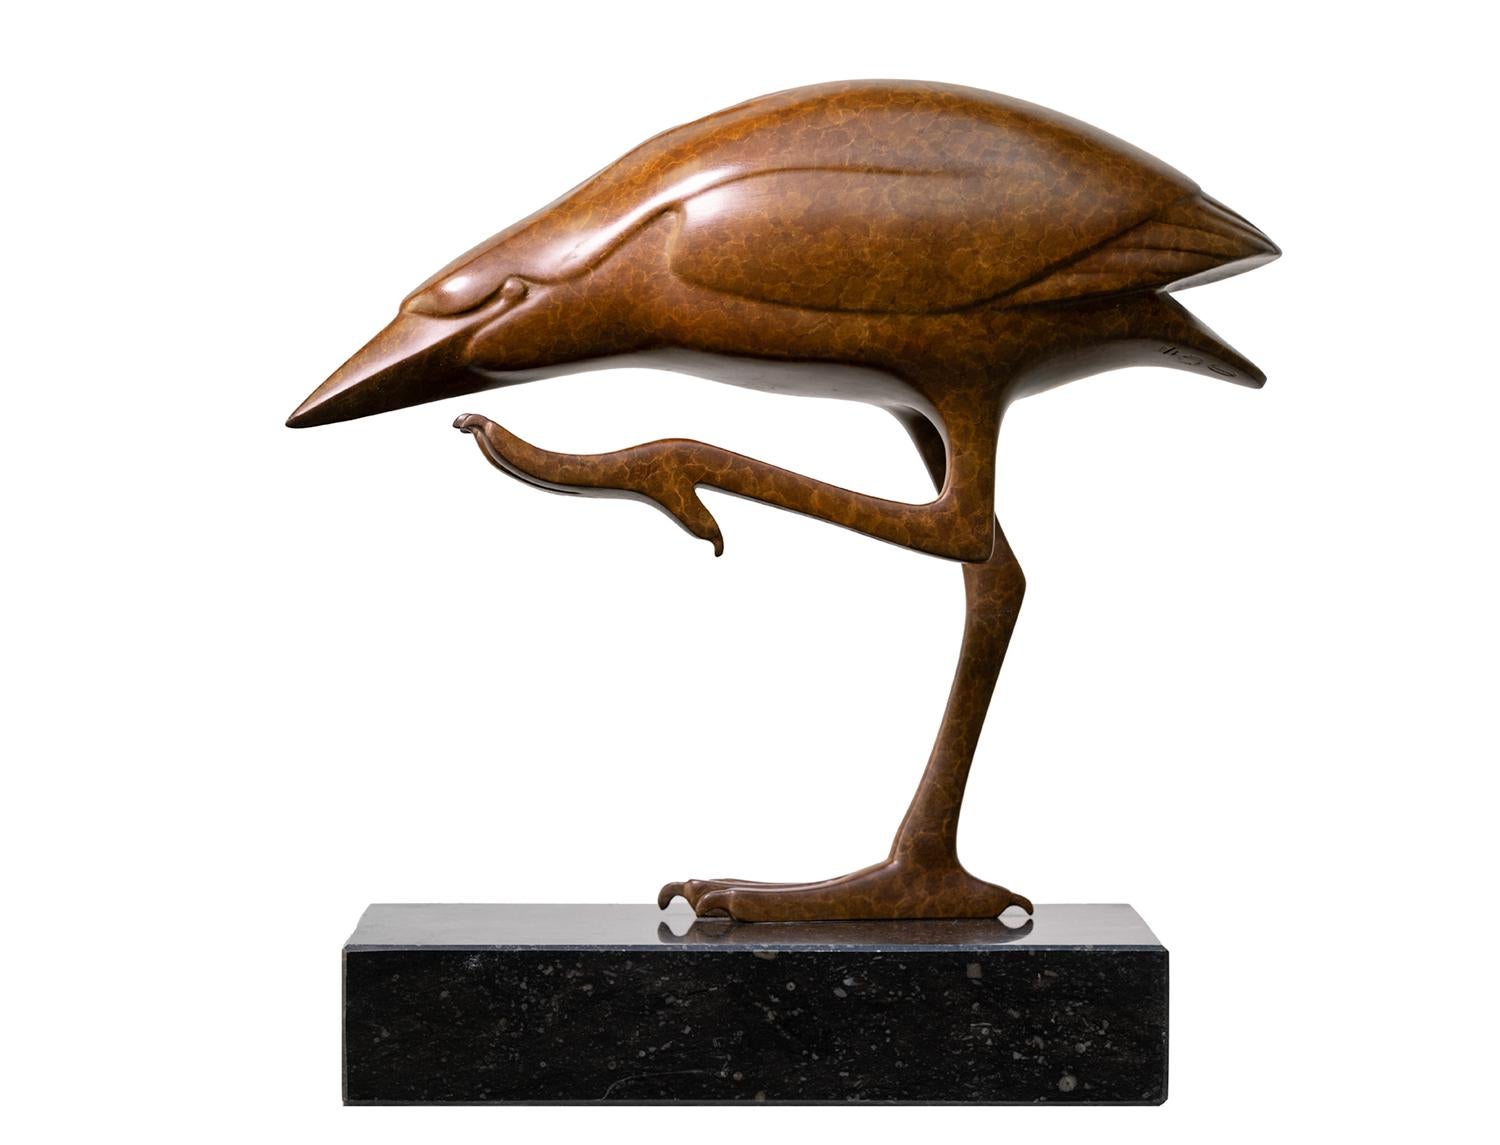 Evert den Hartog Figurative Sculpture - Kwak no. 5 Bird Bronze Sculpture Animal Animalier Brown Patina Nature In Stock